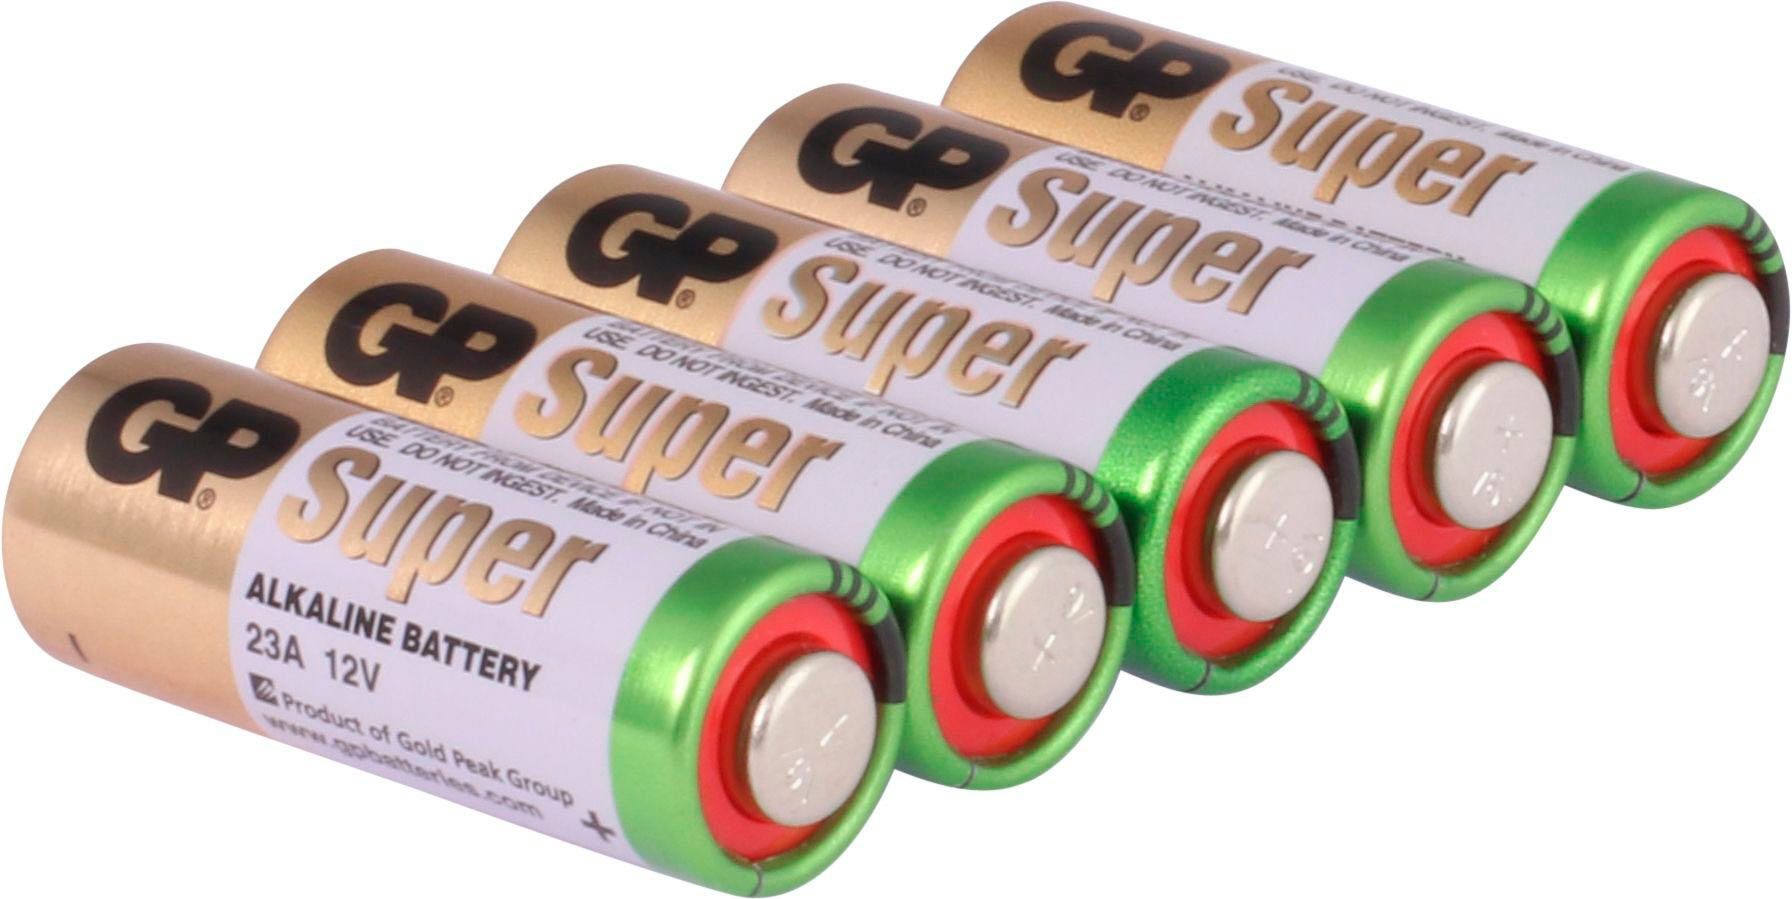 GP Batteries 5er Pack Alkaline Rundzellenbatterie 23A Batterie, (12 V, 5 St)